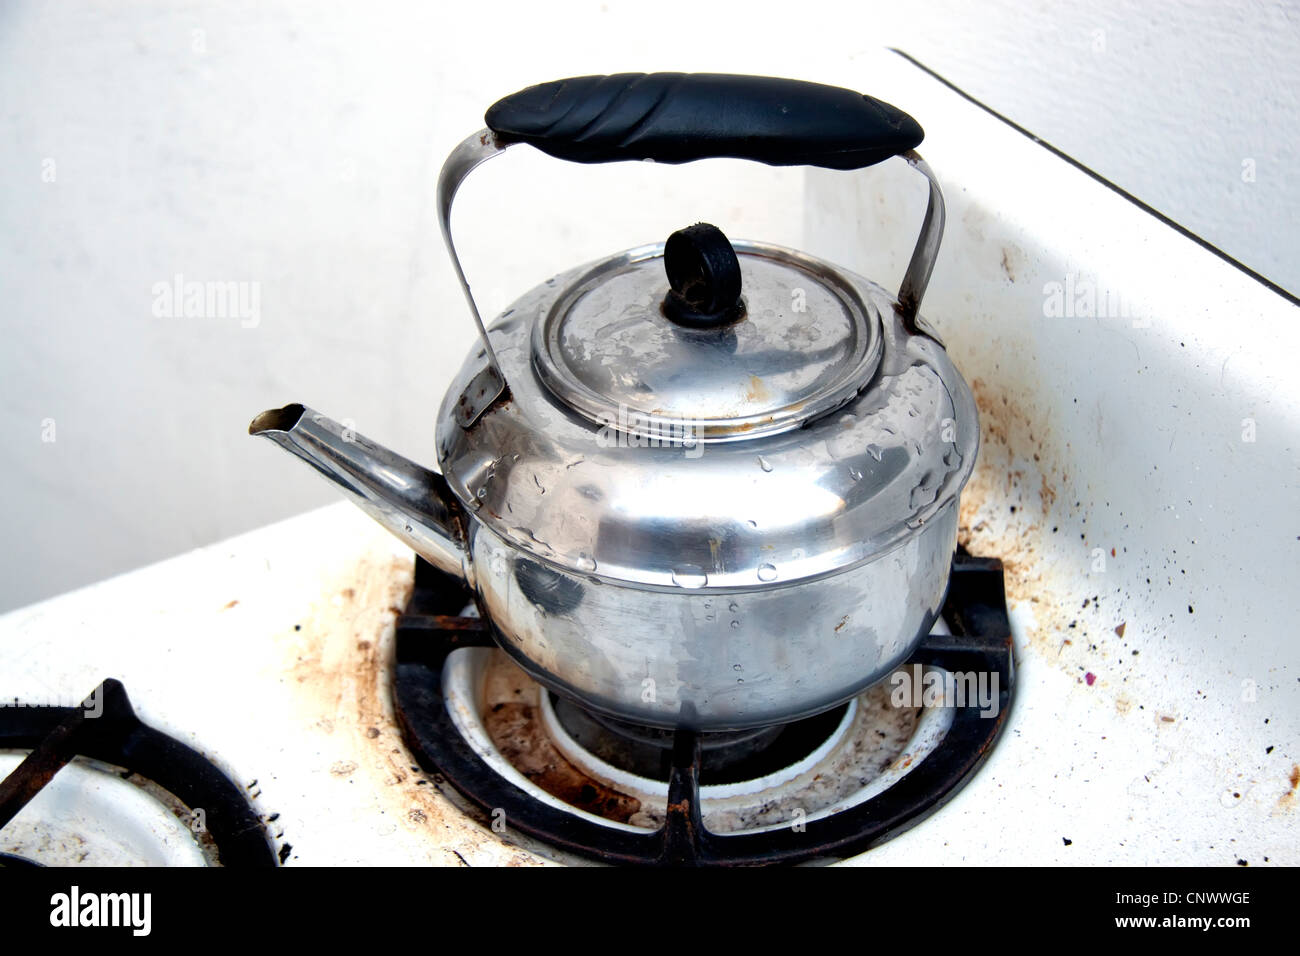 https://c8.alamy.com/comp/CNWWGE/hot-water-kettle-on-the-stove-CNWWGE.jpg